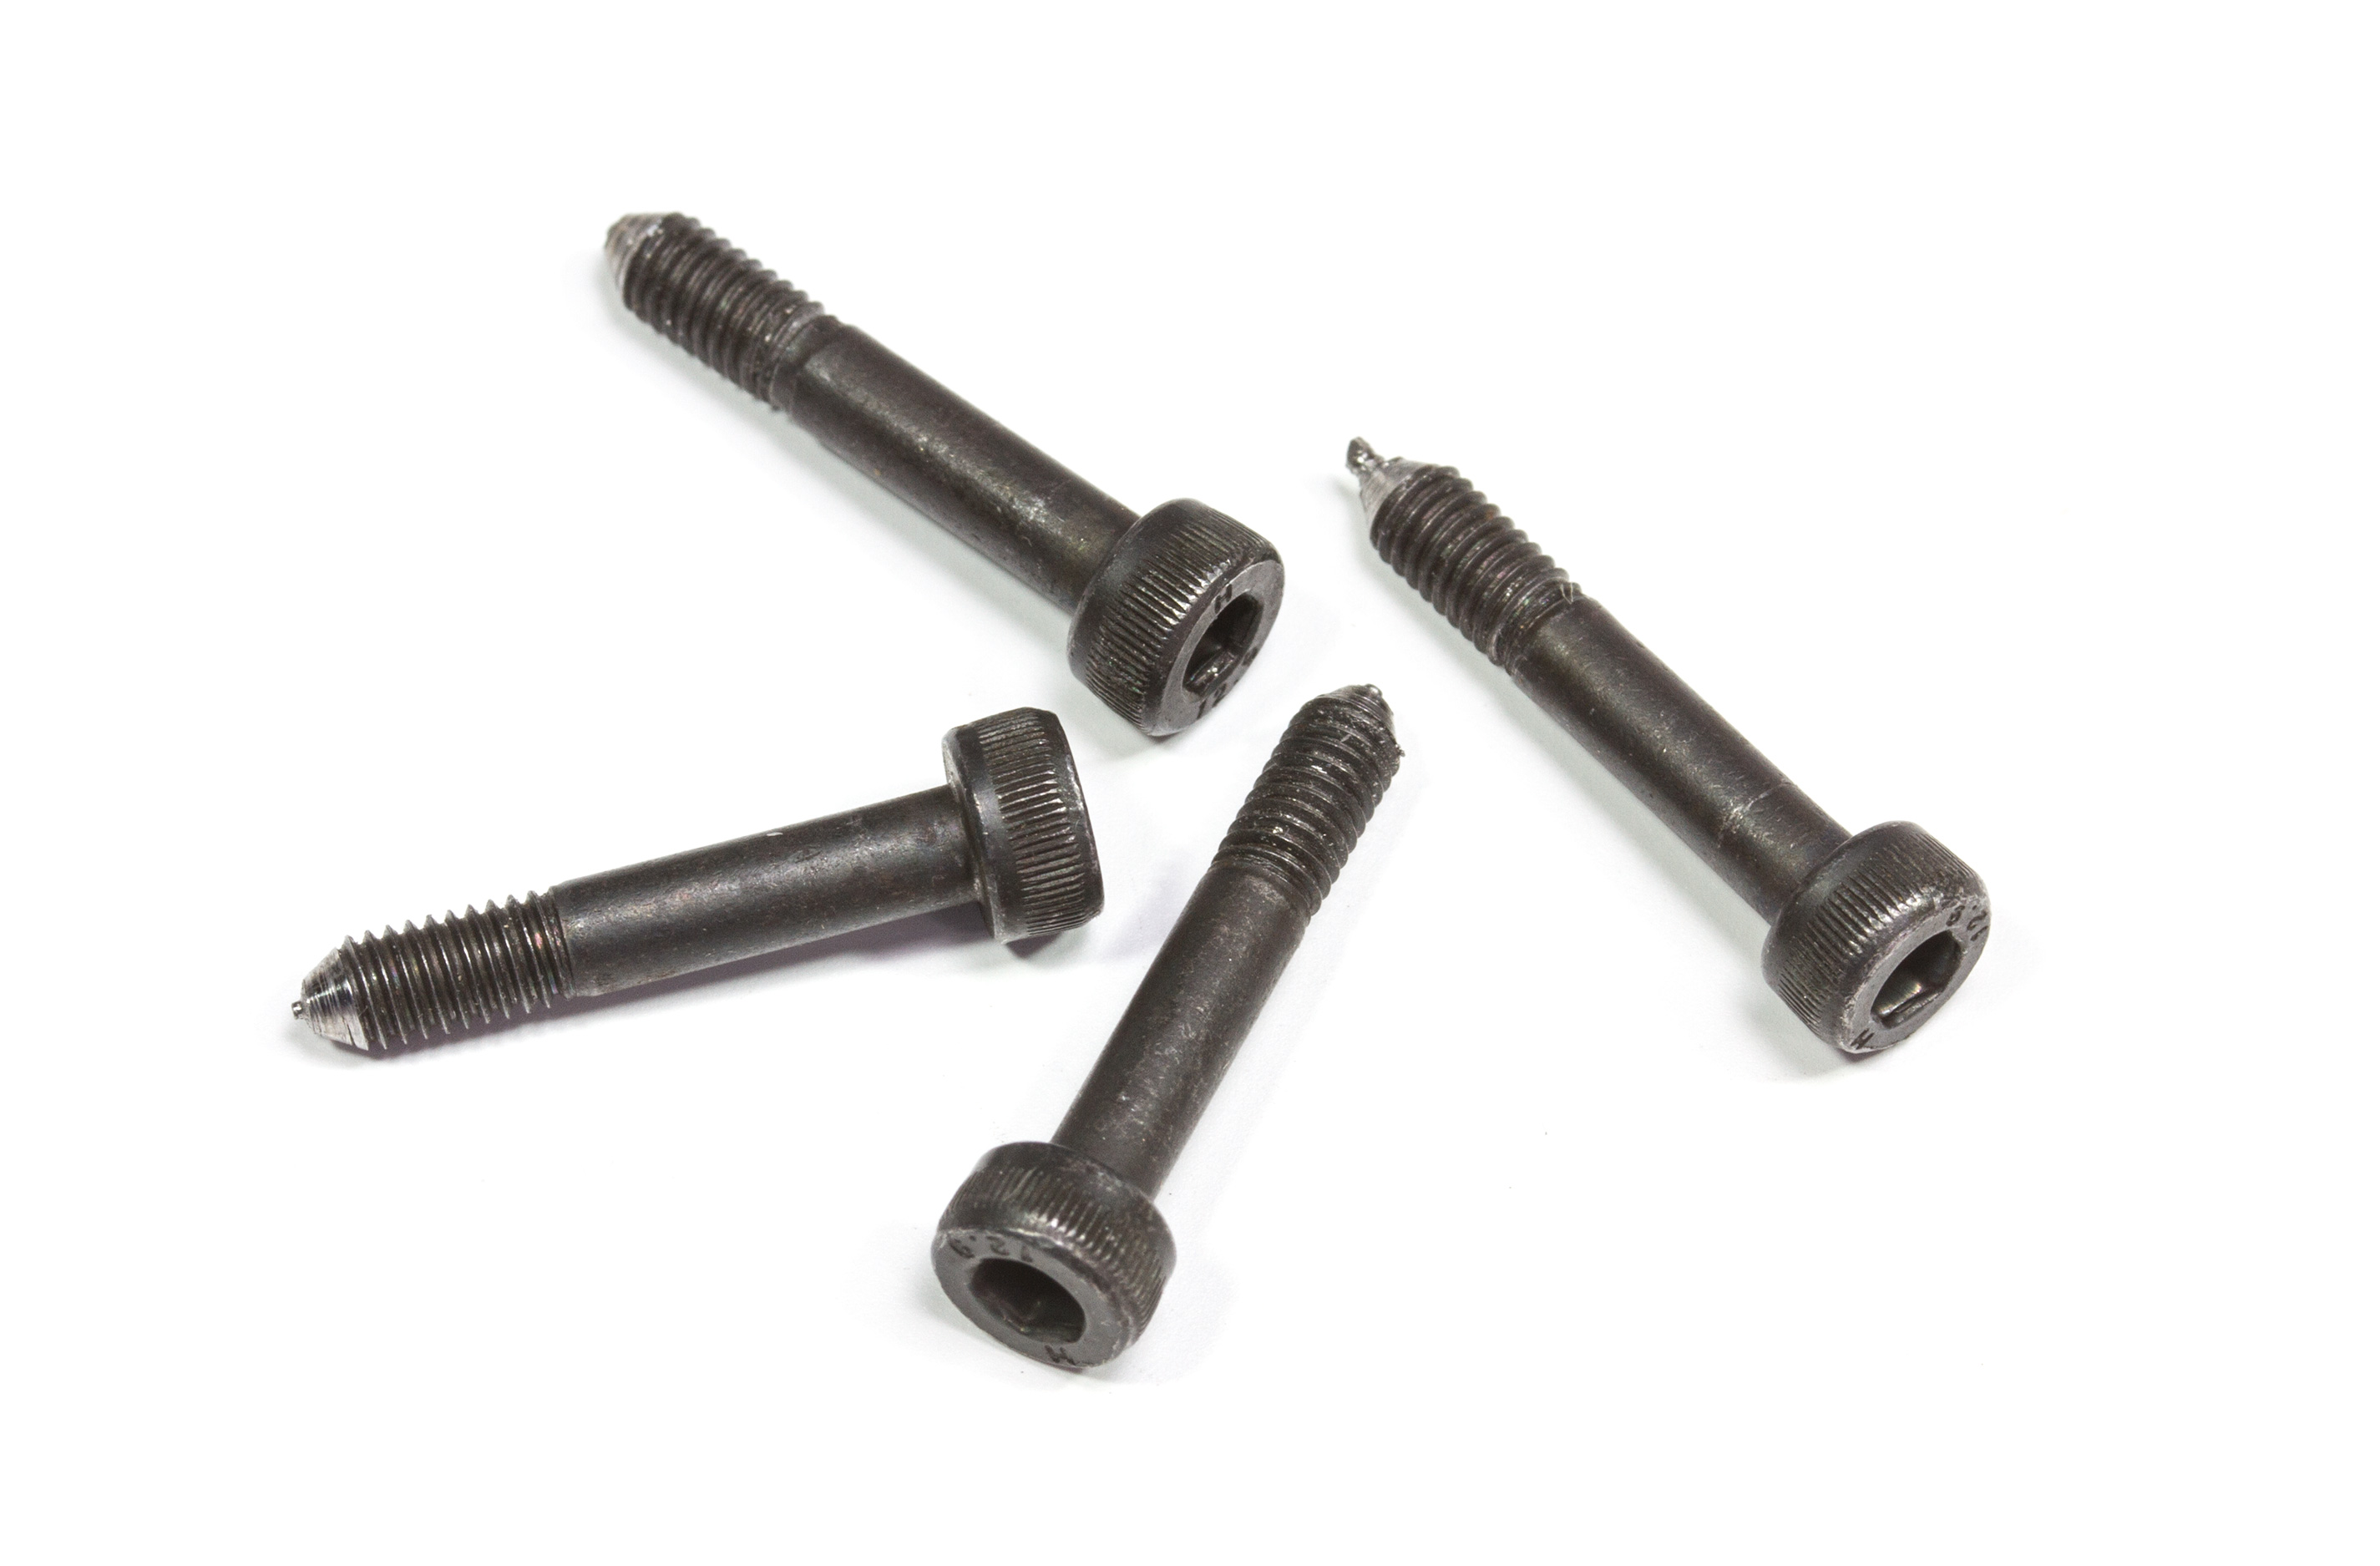 AREA-BJ029/16 Special screw